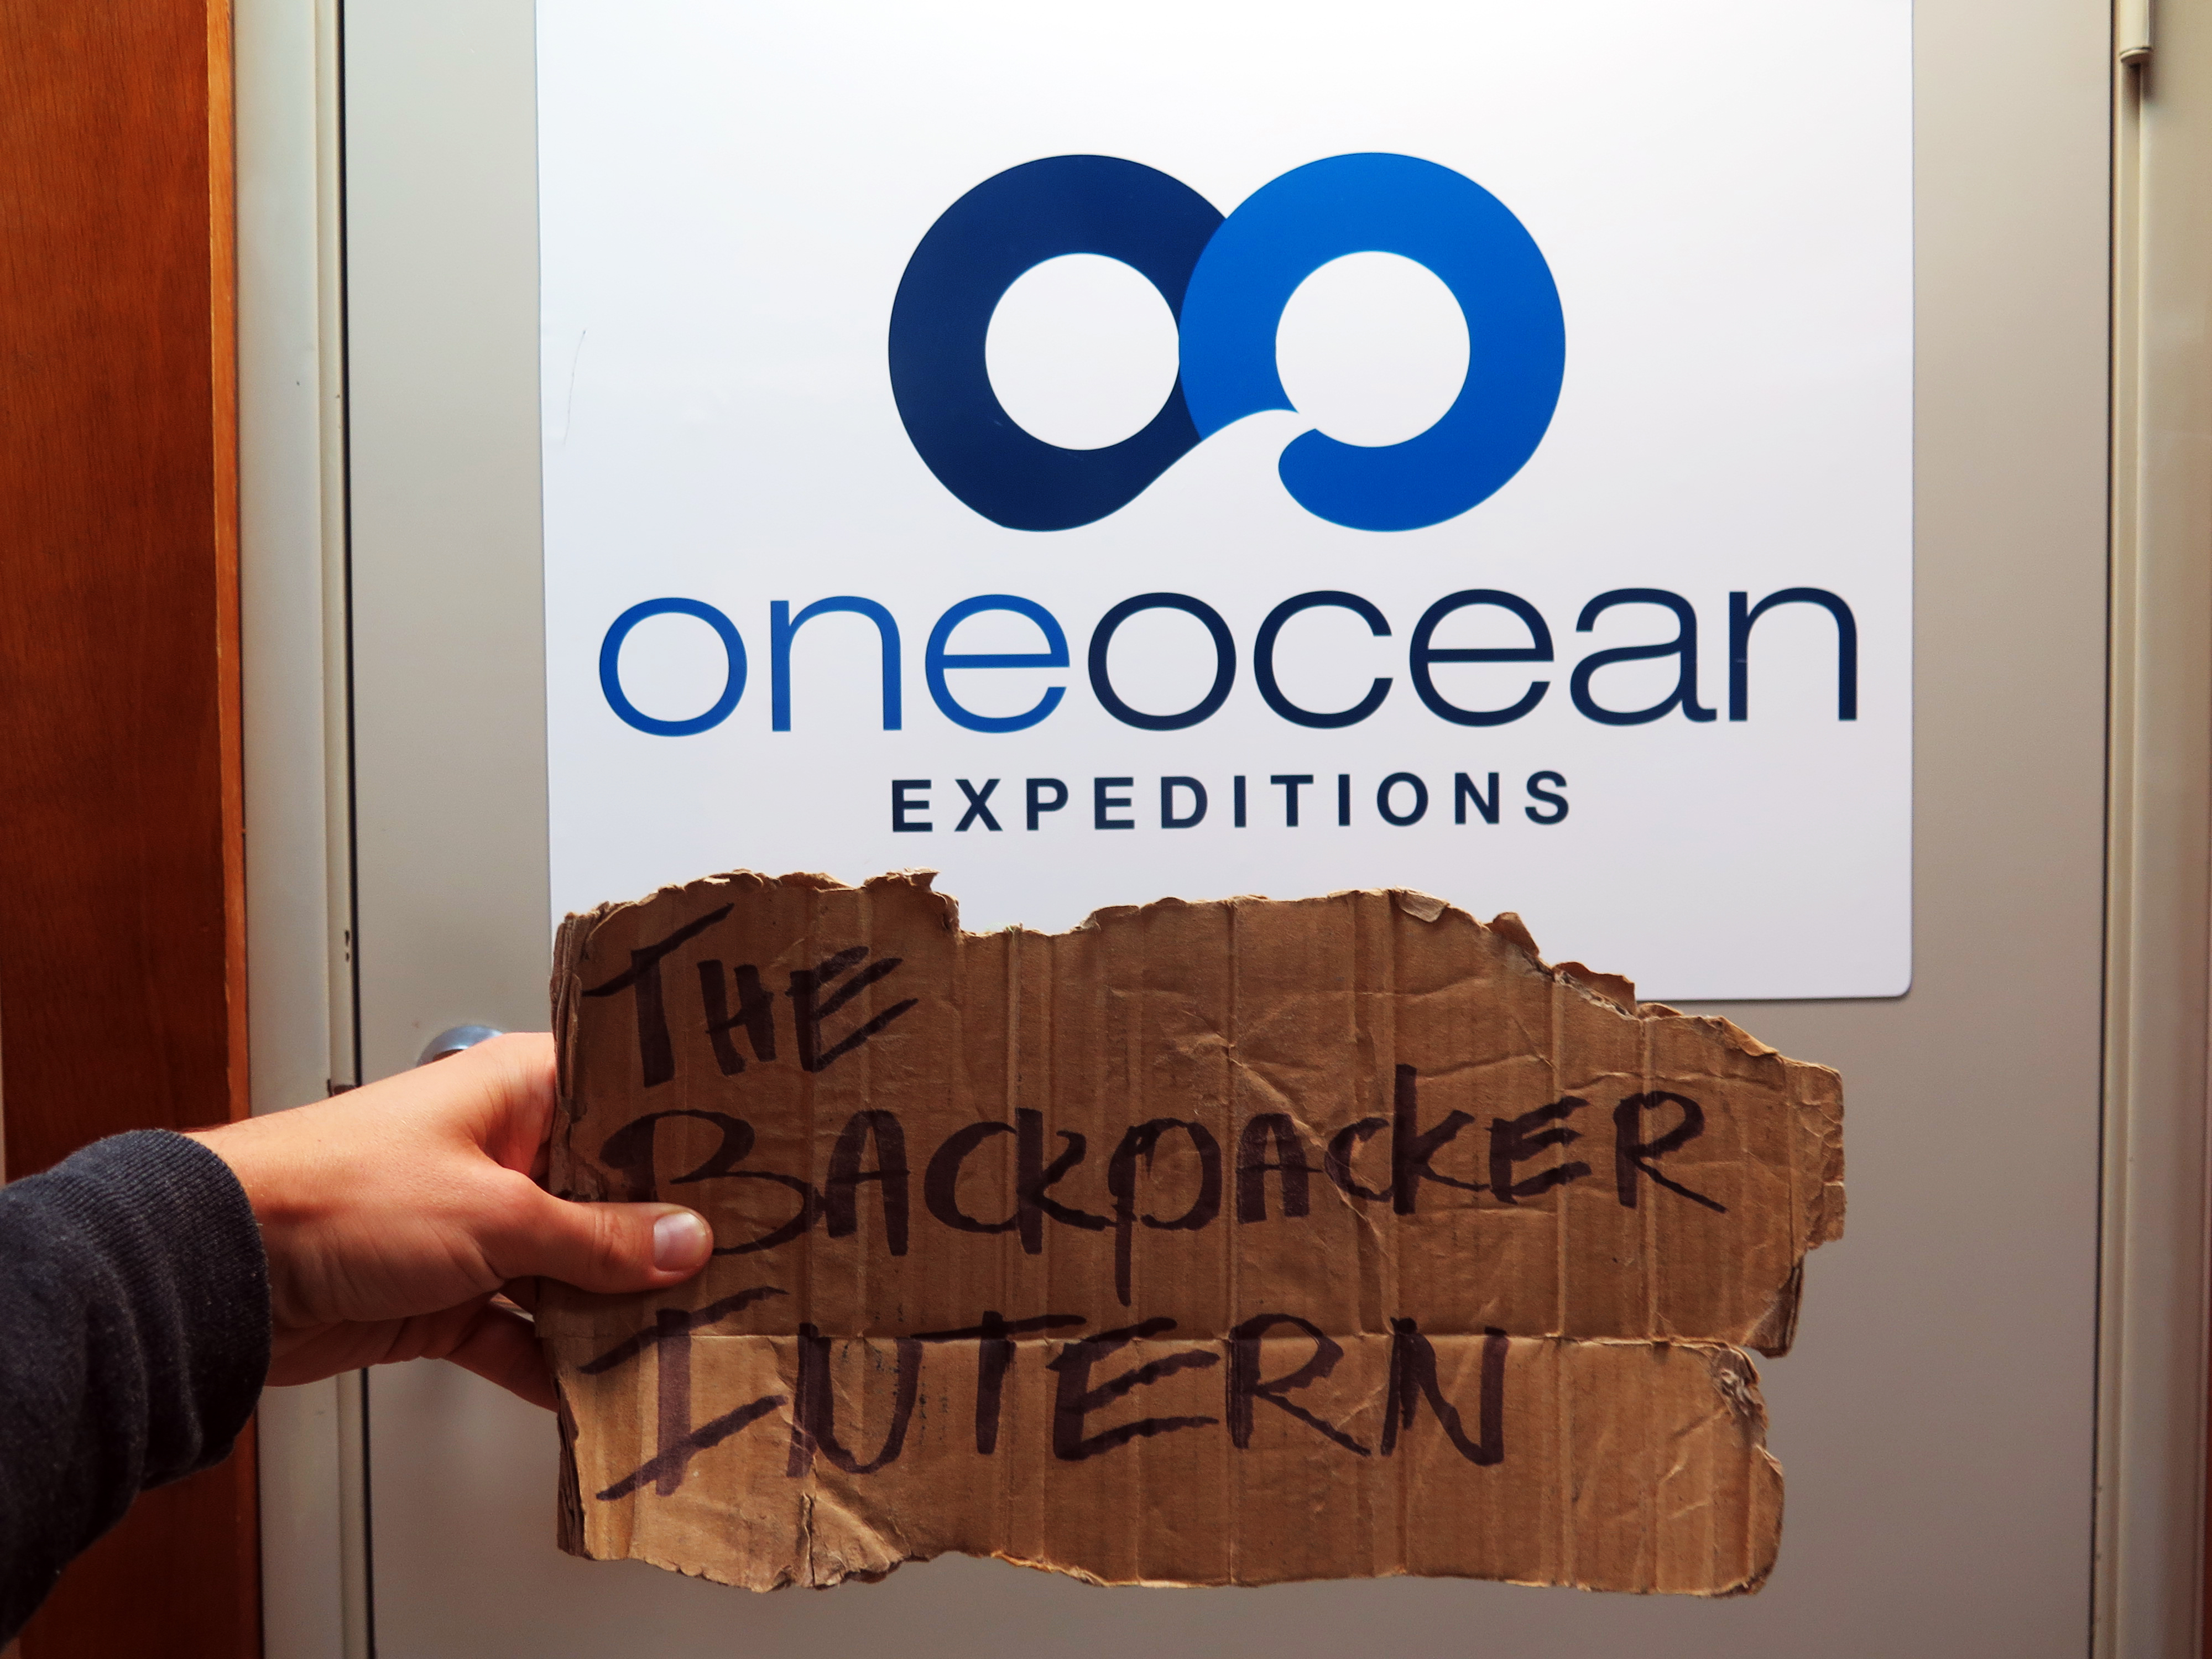 TheBackpackerIntern + One Ocean Expeditions